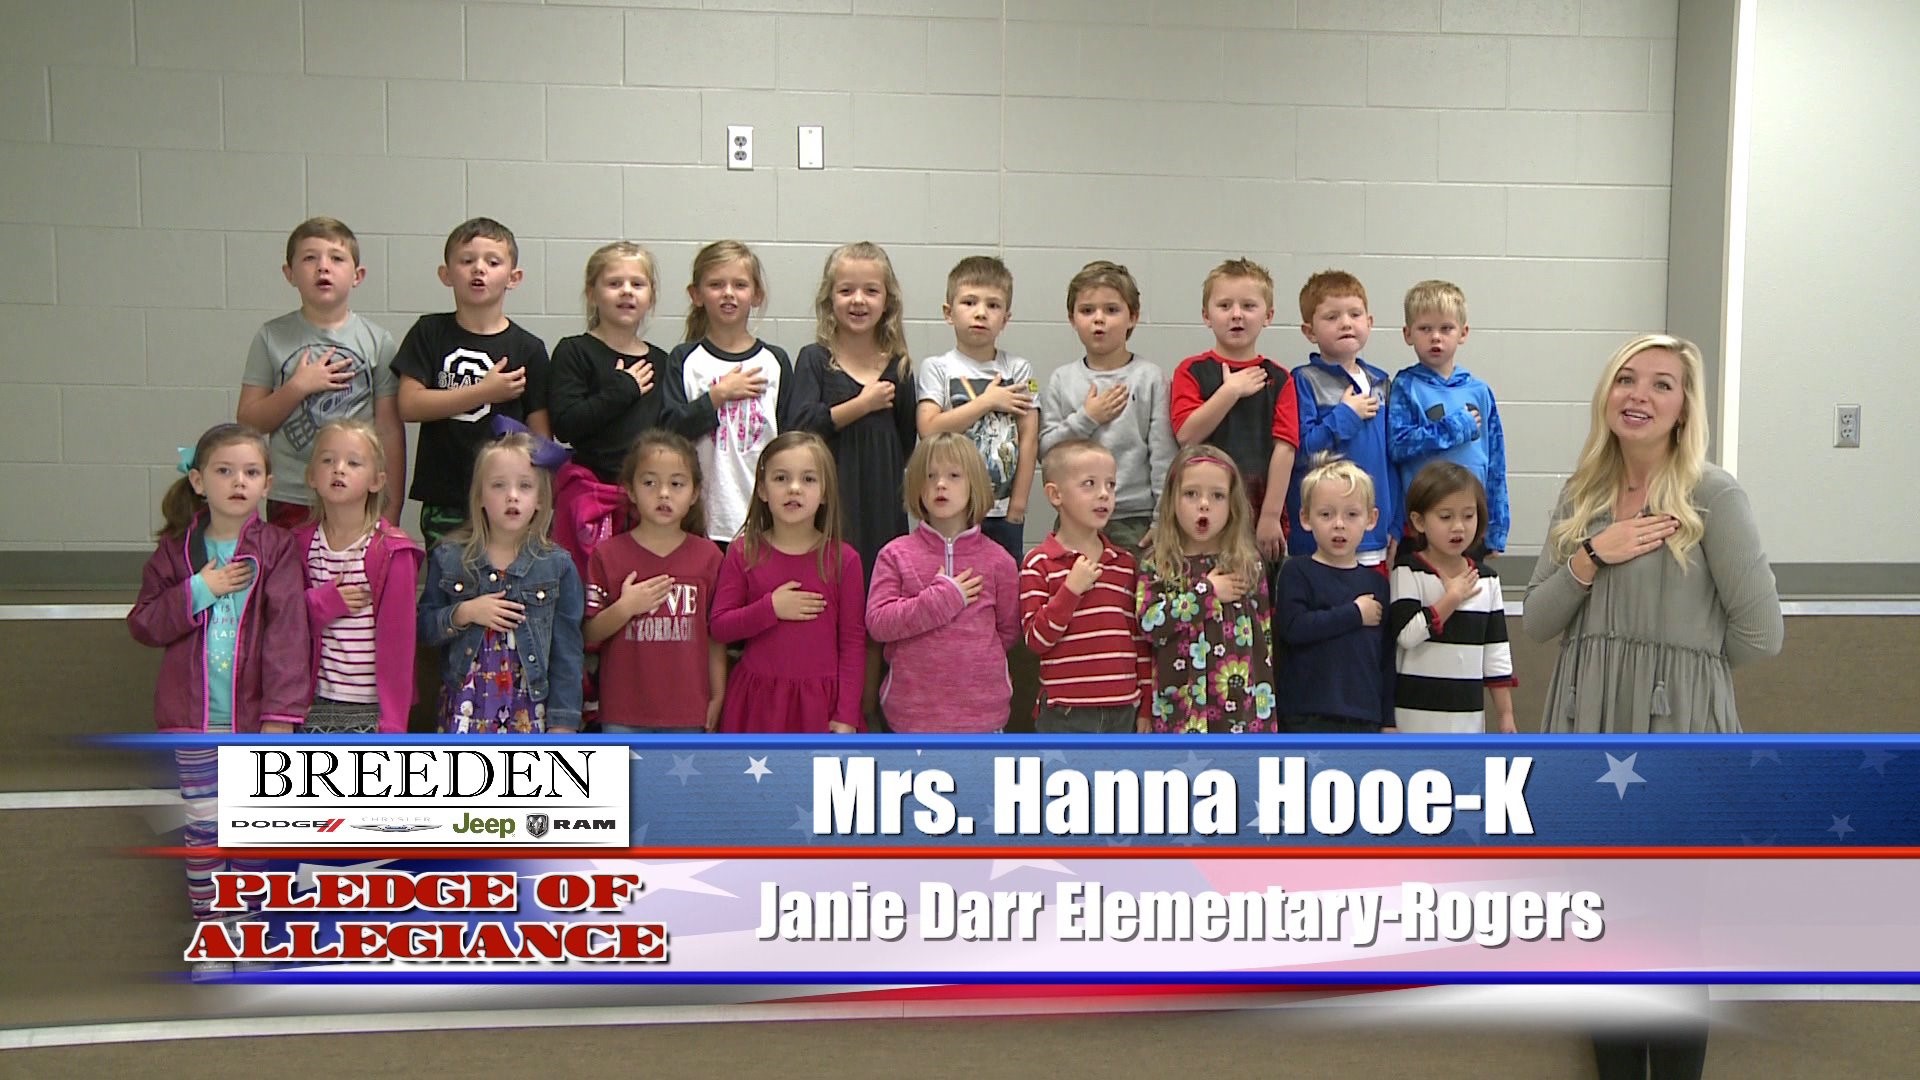 Mrs. Hanna Hooe  K  Janie Darr Elementary - Rogers